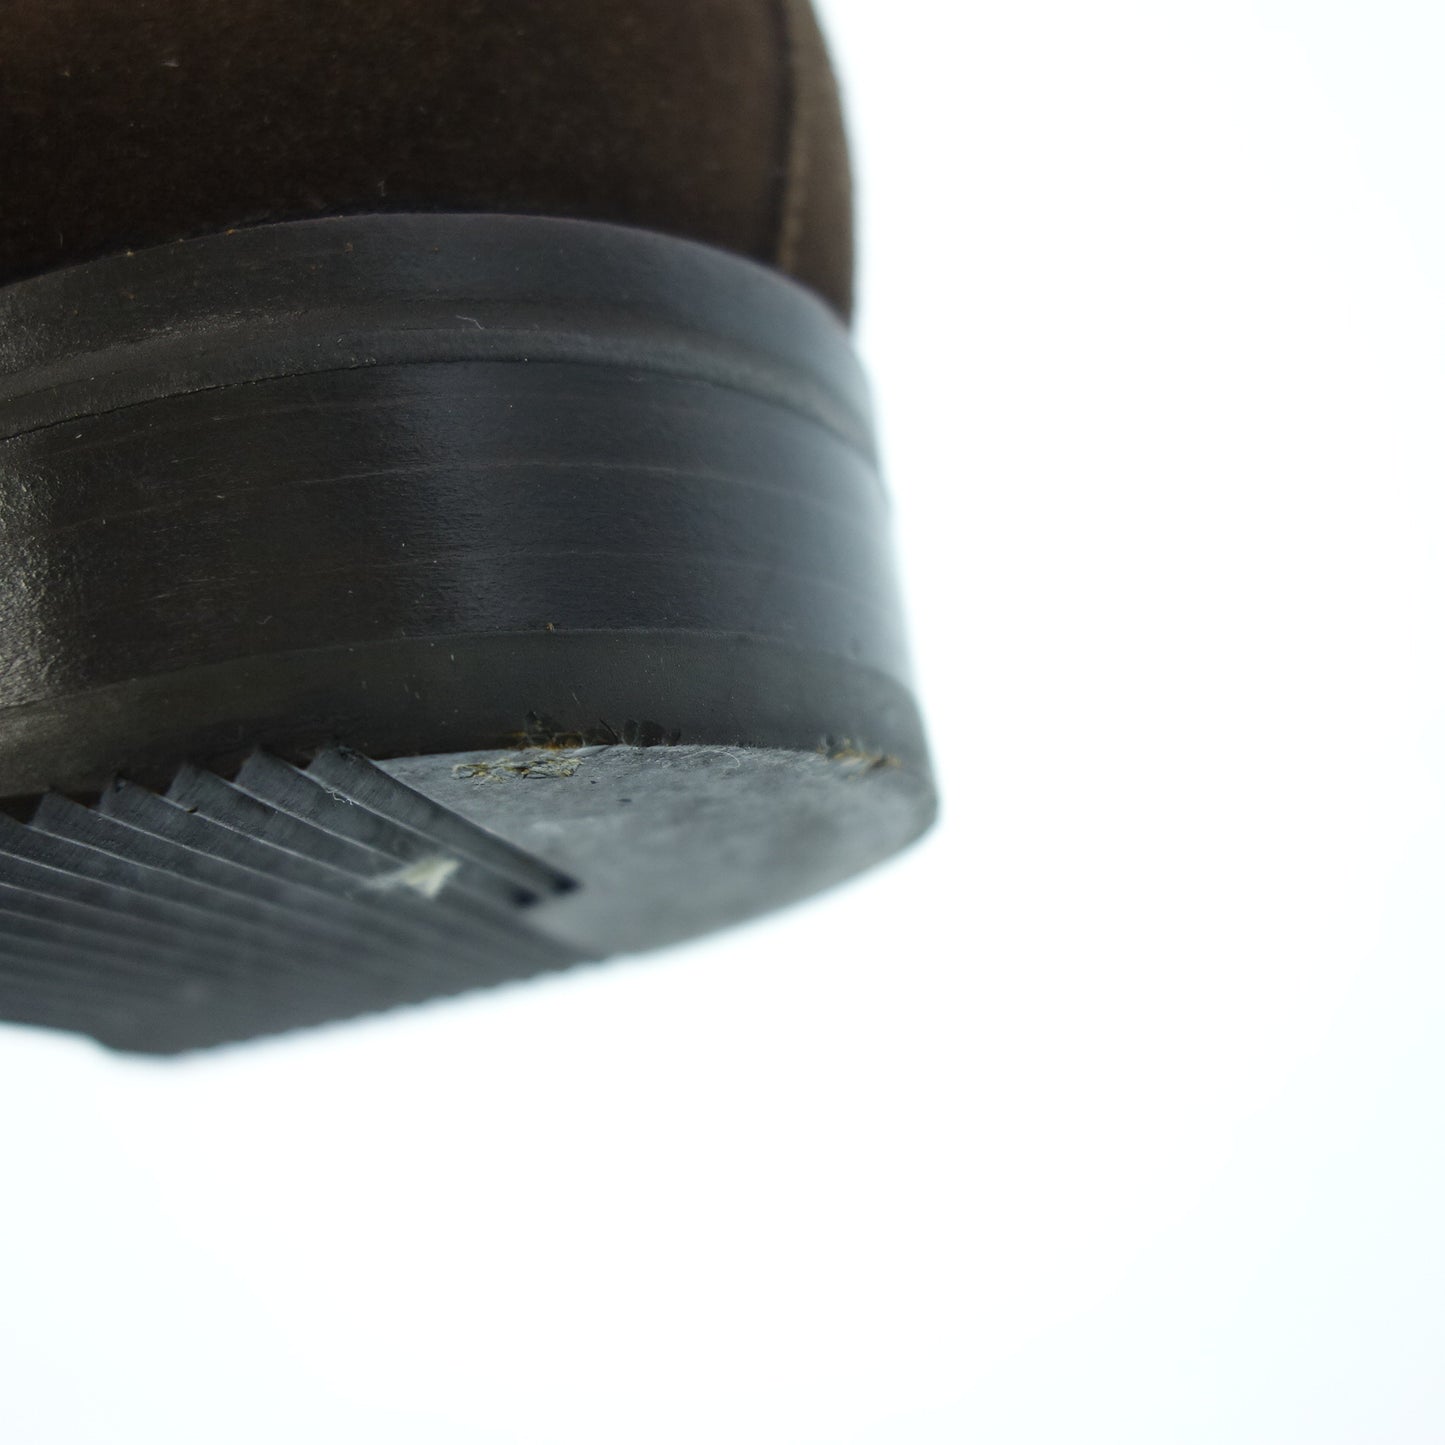 Very good condition ◆ TANINOCRISCI leather shoes suede cap toe men's brown size 6.5 TANINOCRISCI [LA] 